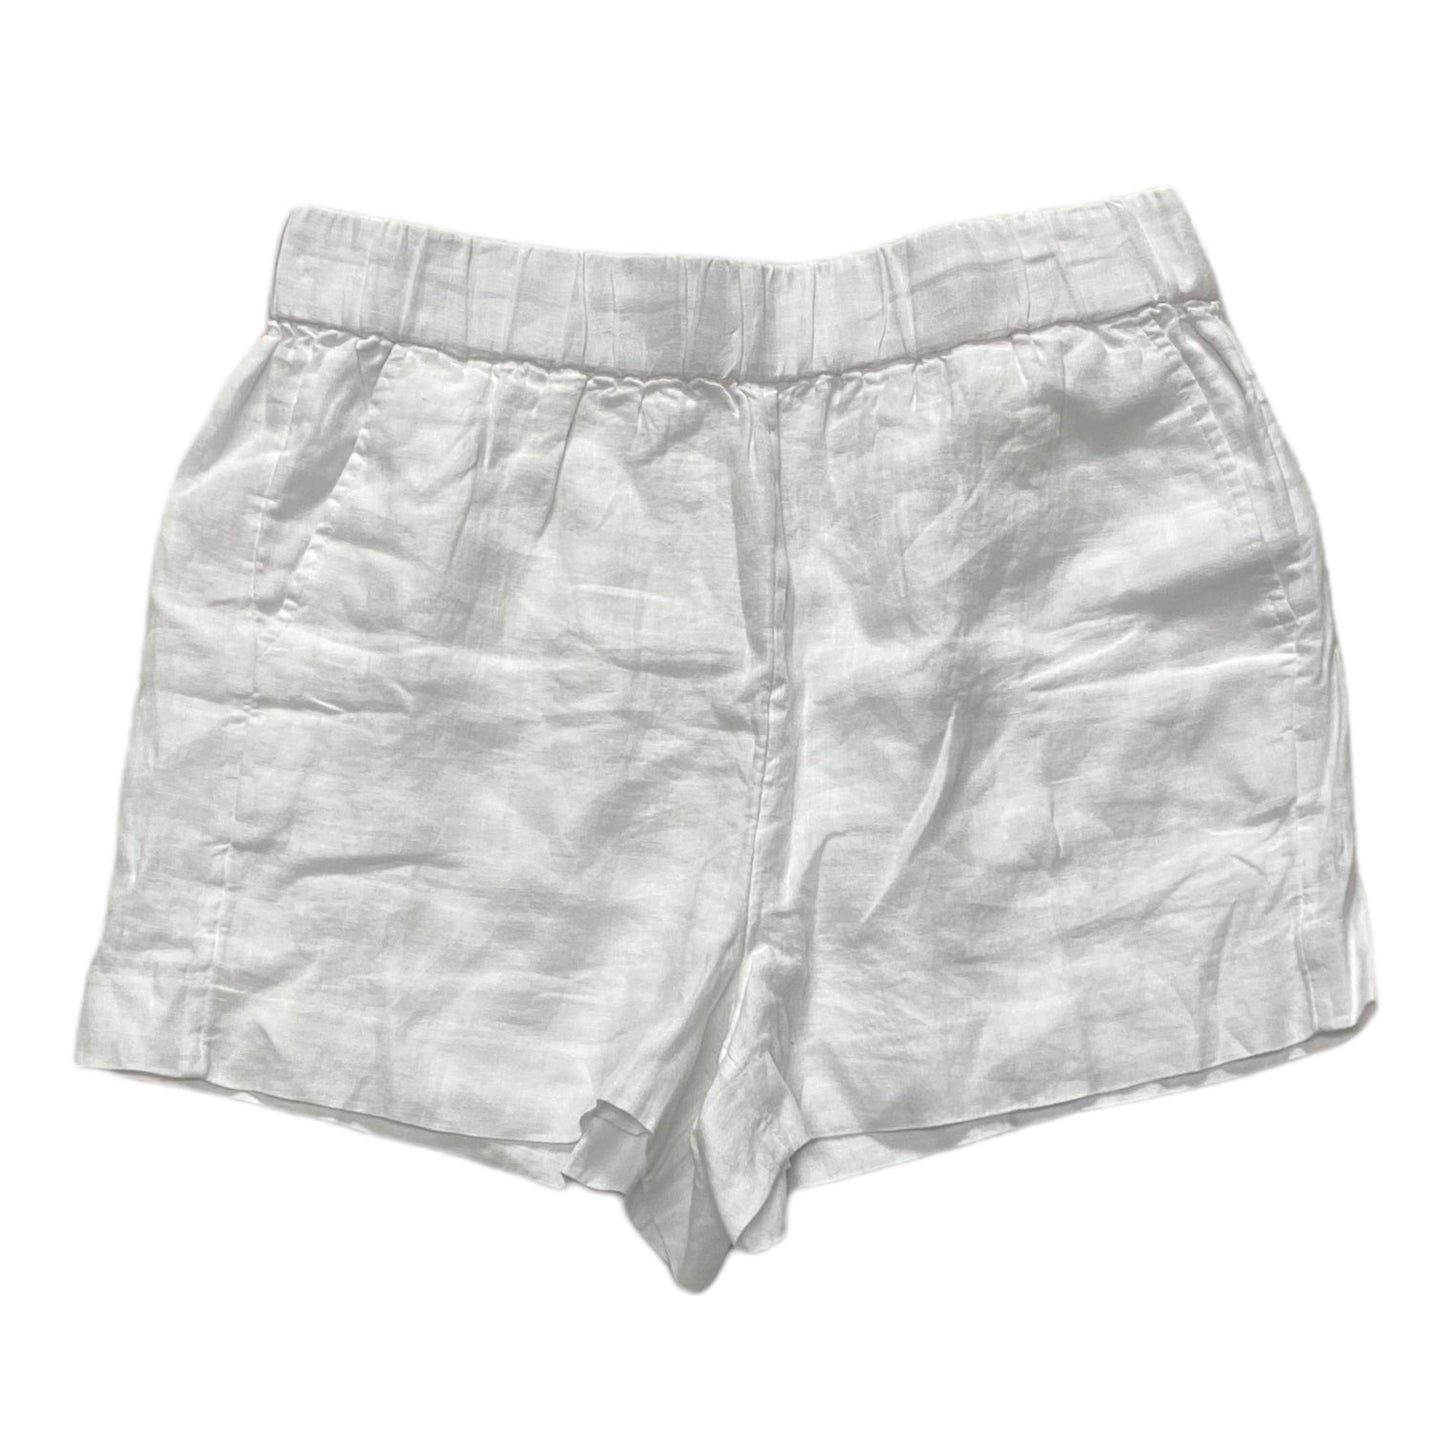 White Shorts J. Crew, Size 8